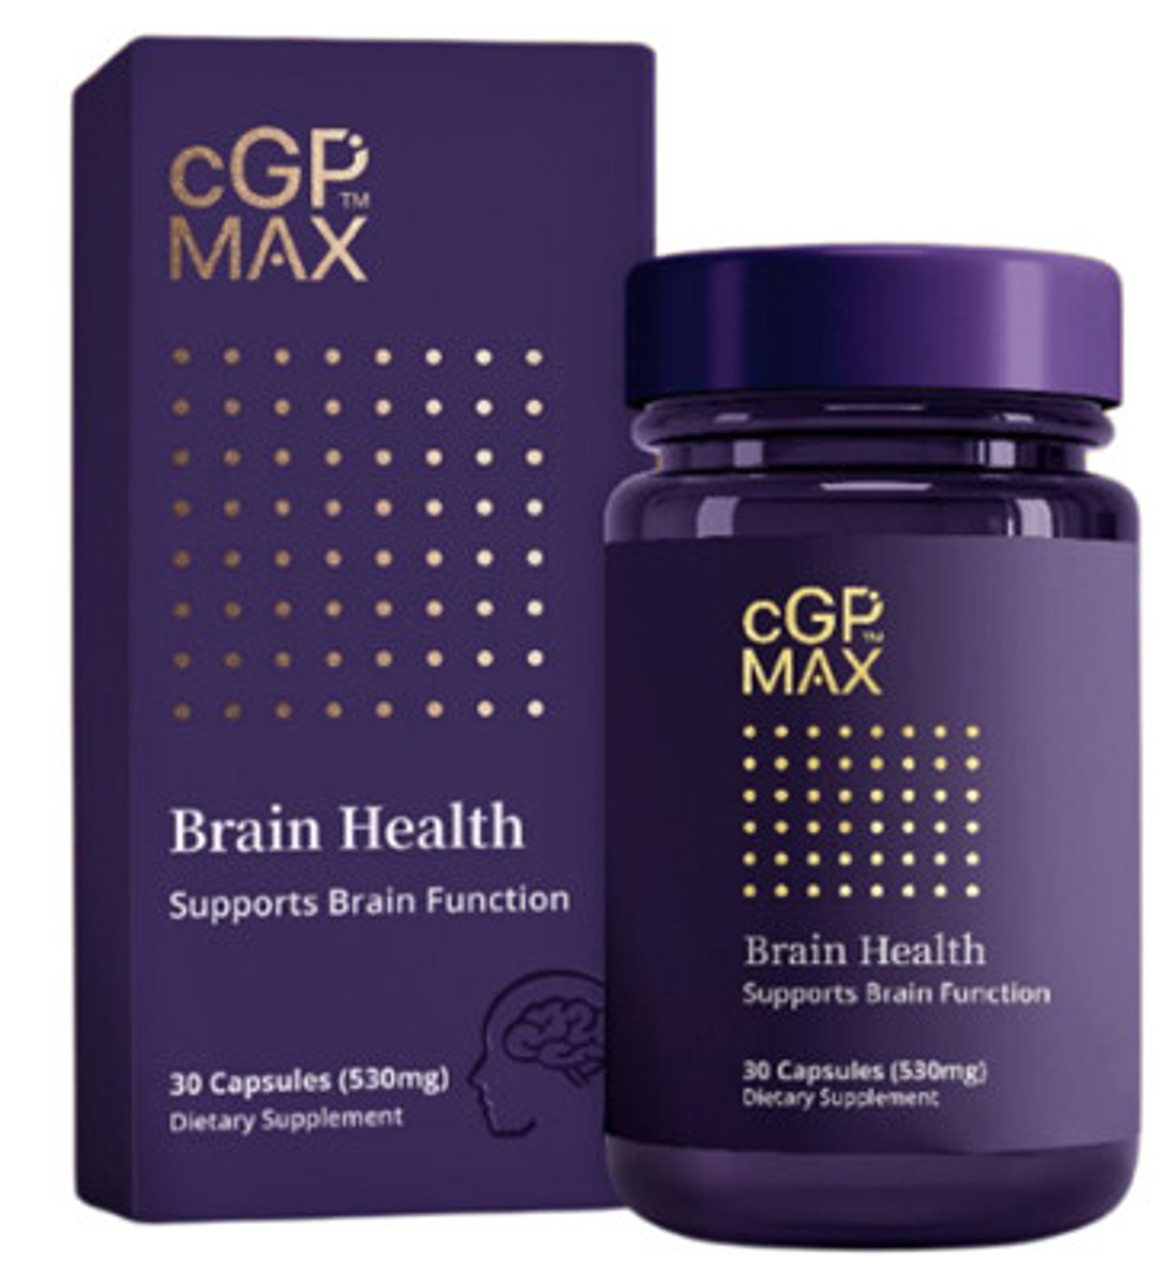 CGPMAX Brain Health Capsules 30s